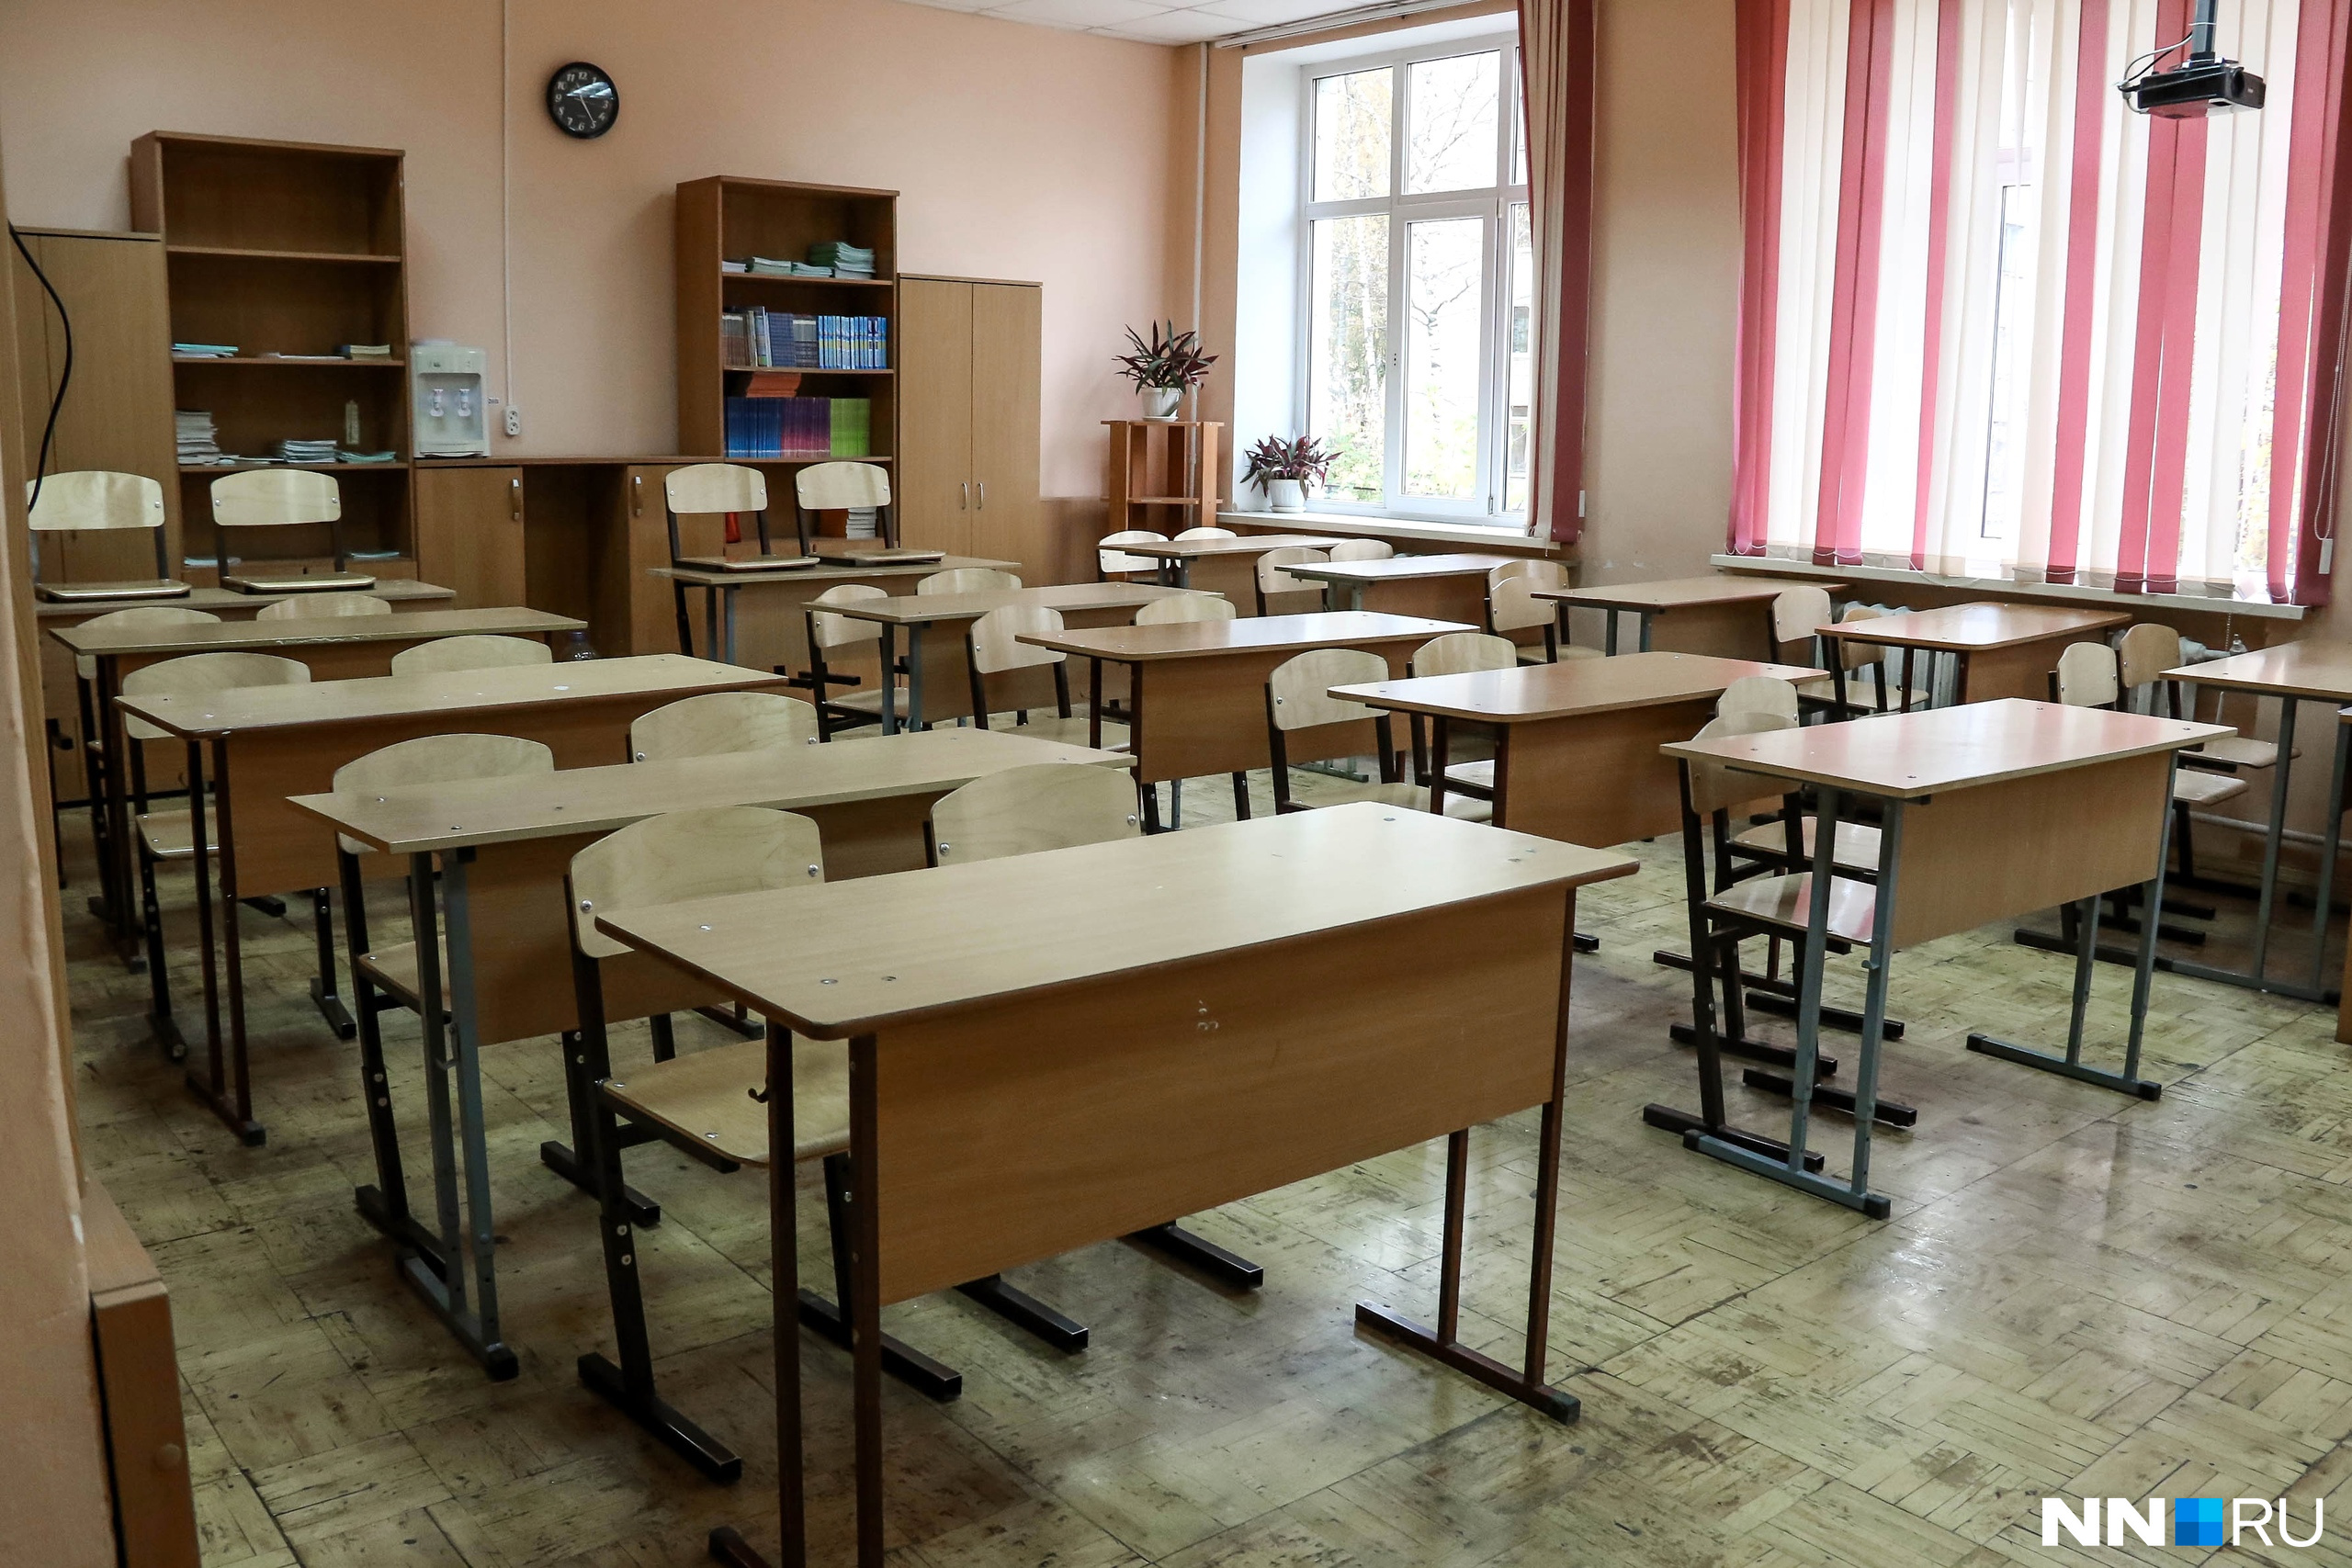 6 А класс школа 54 школа Нижний Новгород 2022